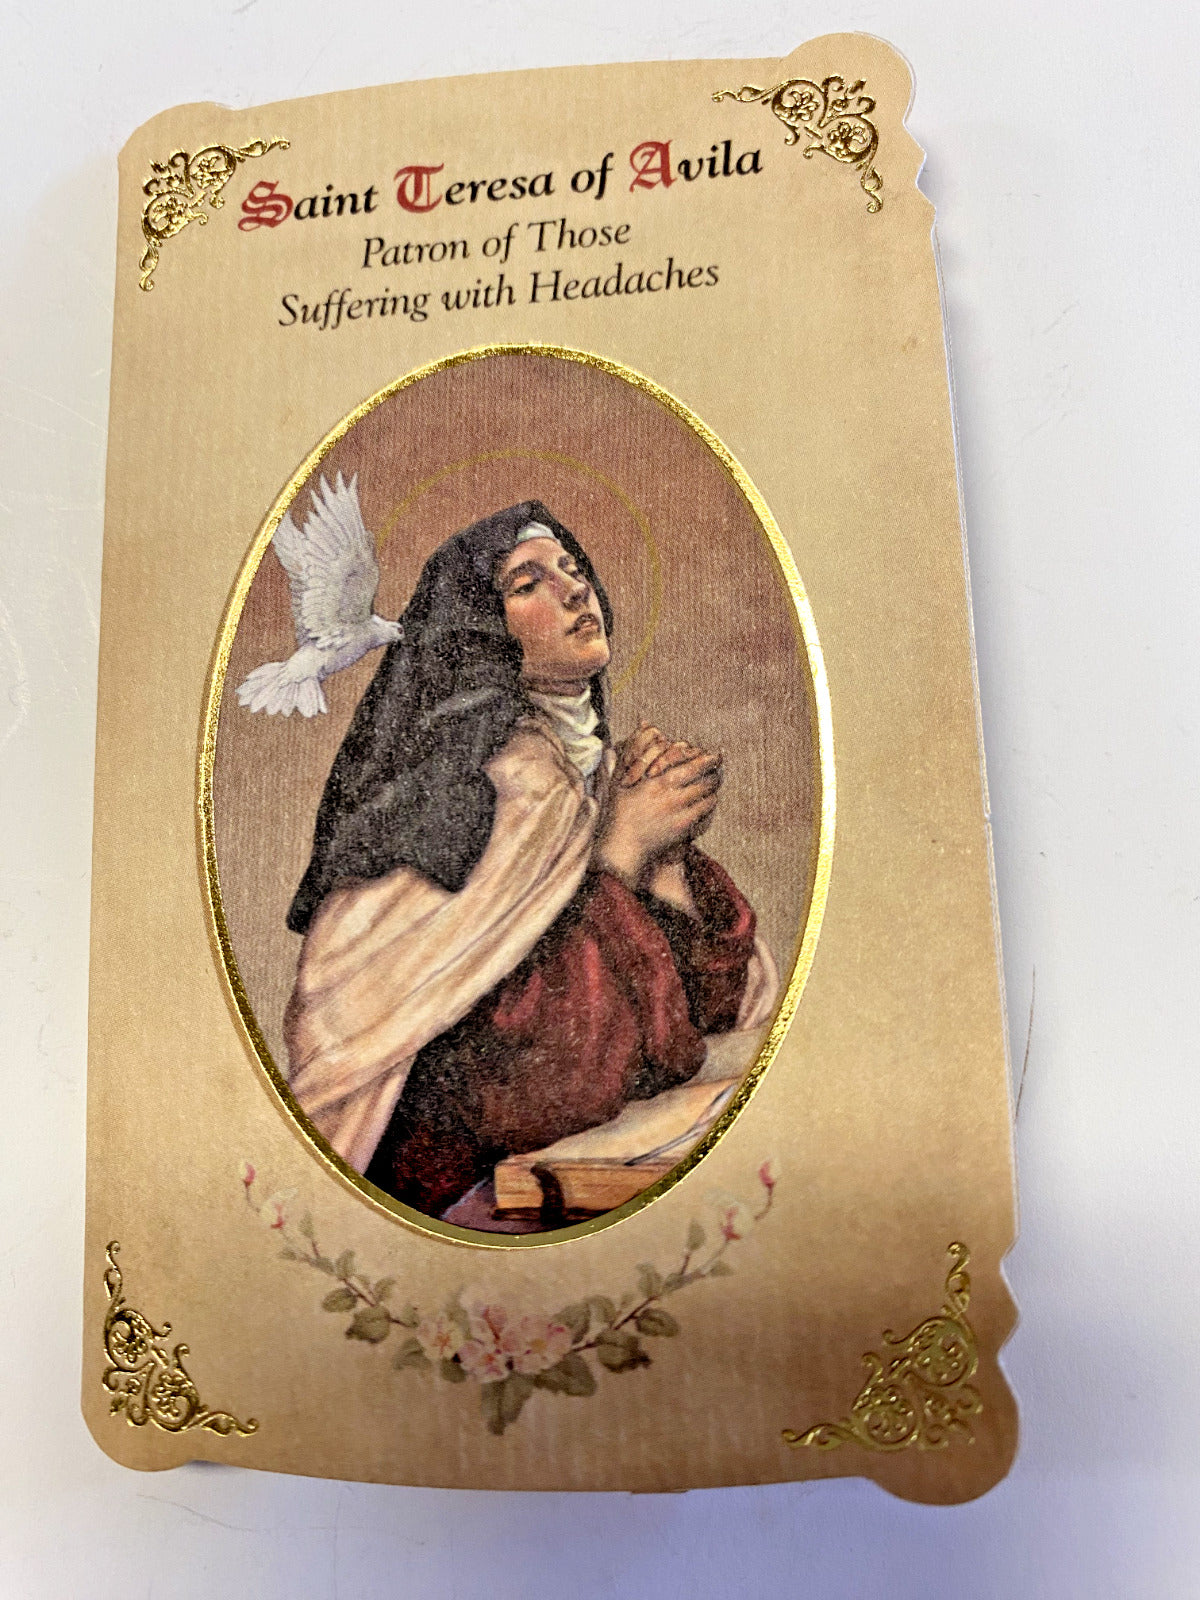 Saint Teresa of Avila "Headache, Prayer" Card + Medal, New from Italy